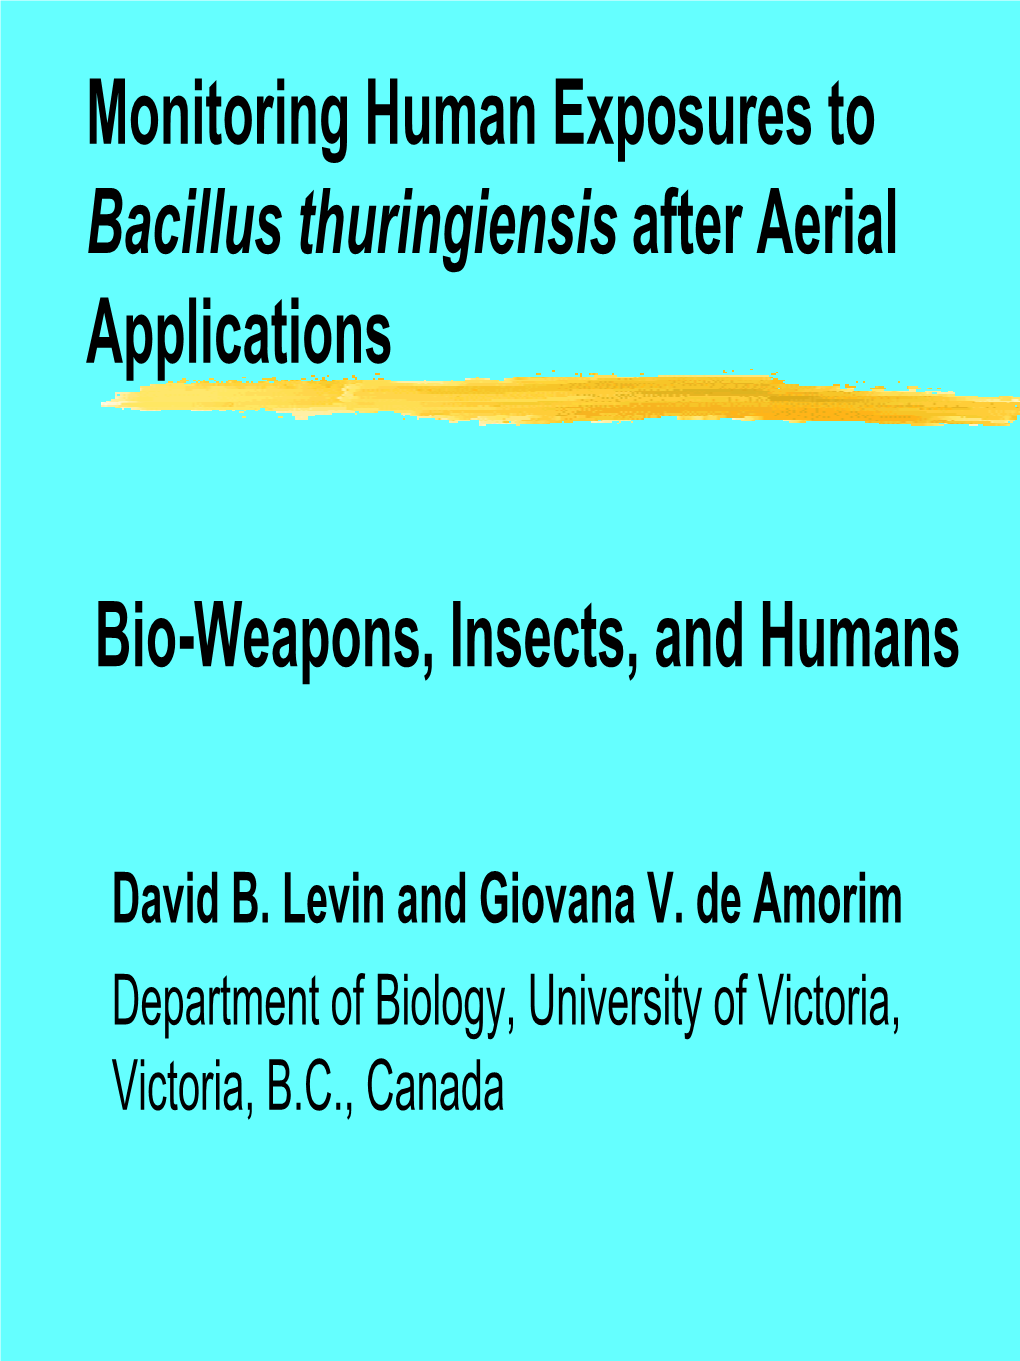 Identification of Bacillus Thurigiensis Var. Kurstaki, Strain HD-1, in People Exposed to an Aereal Spray in Victoria, B.C